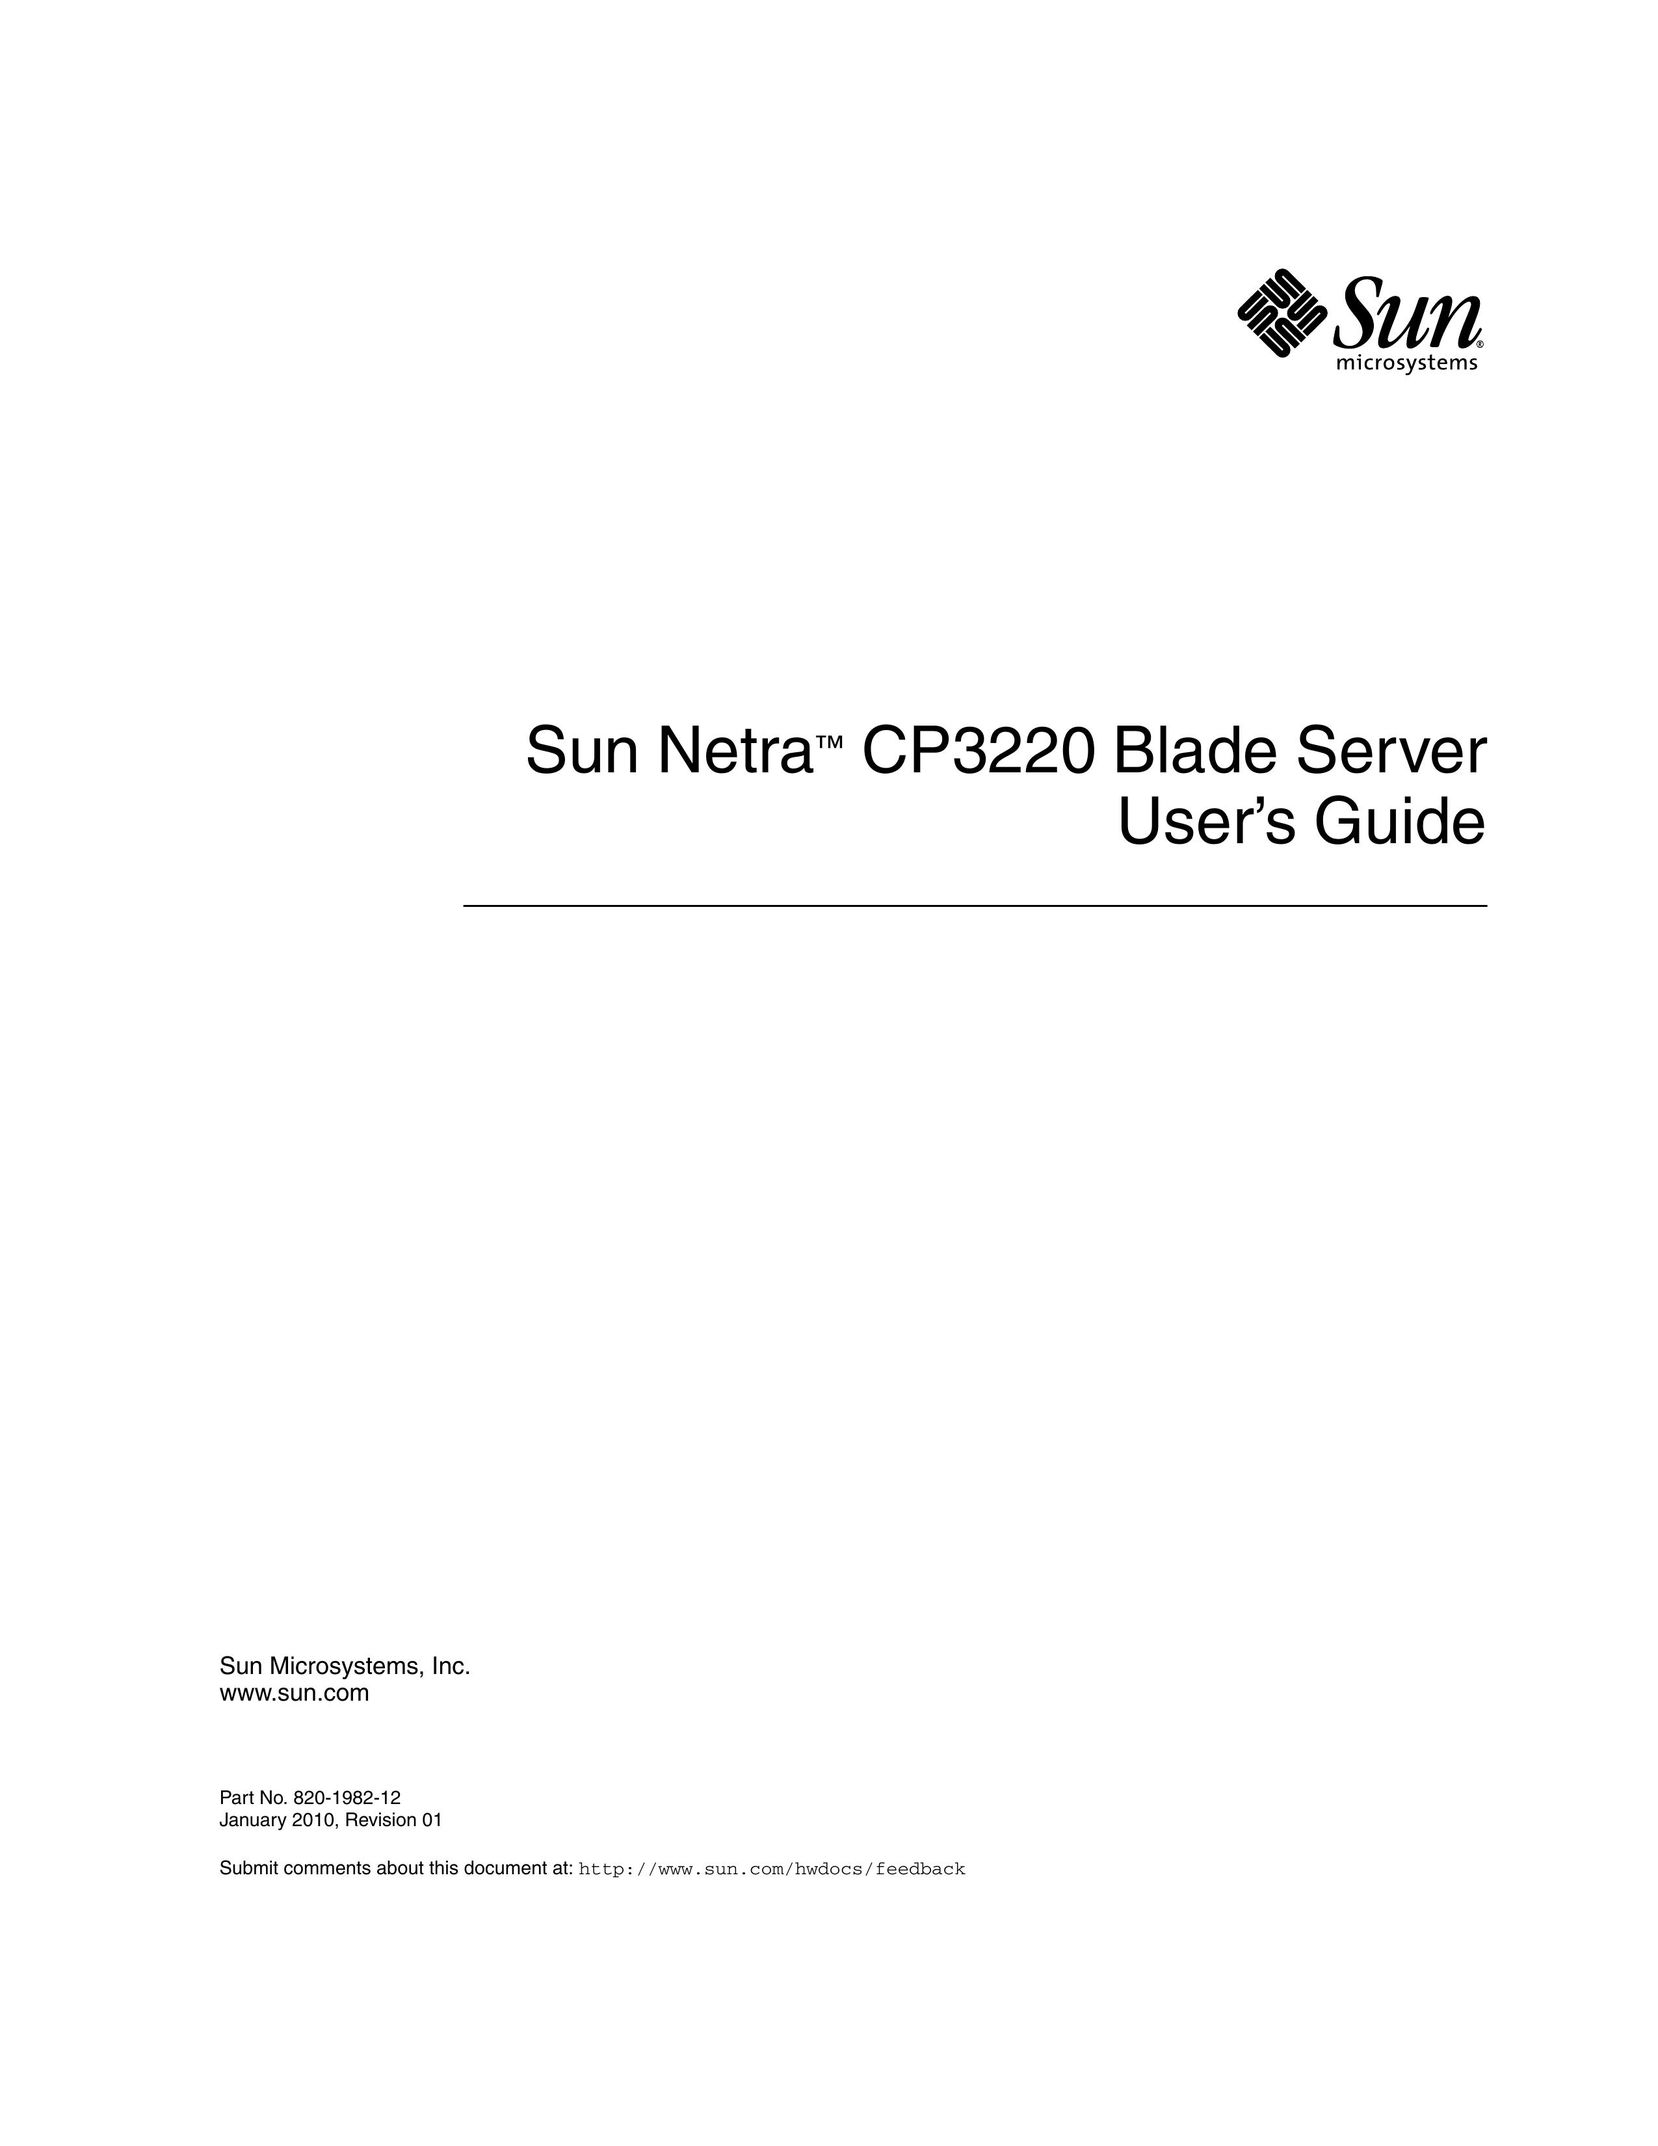 Sun Microsystems CP3220 Server User Manual